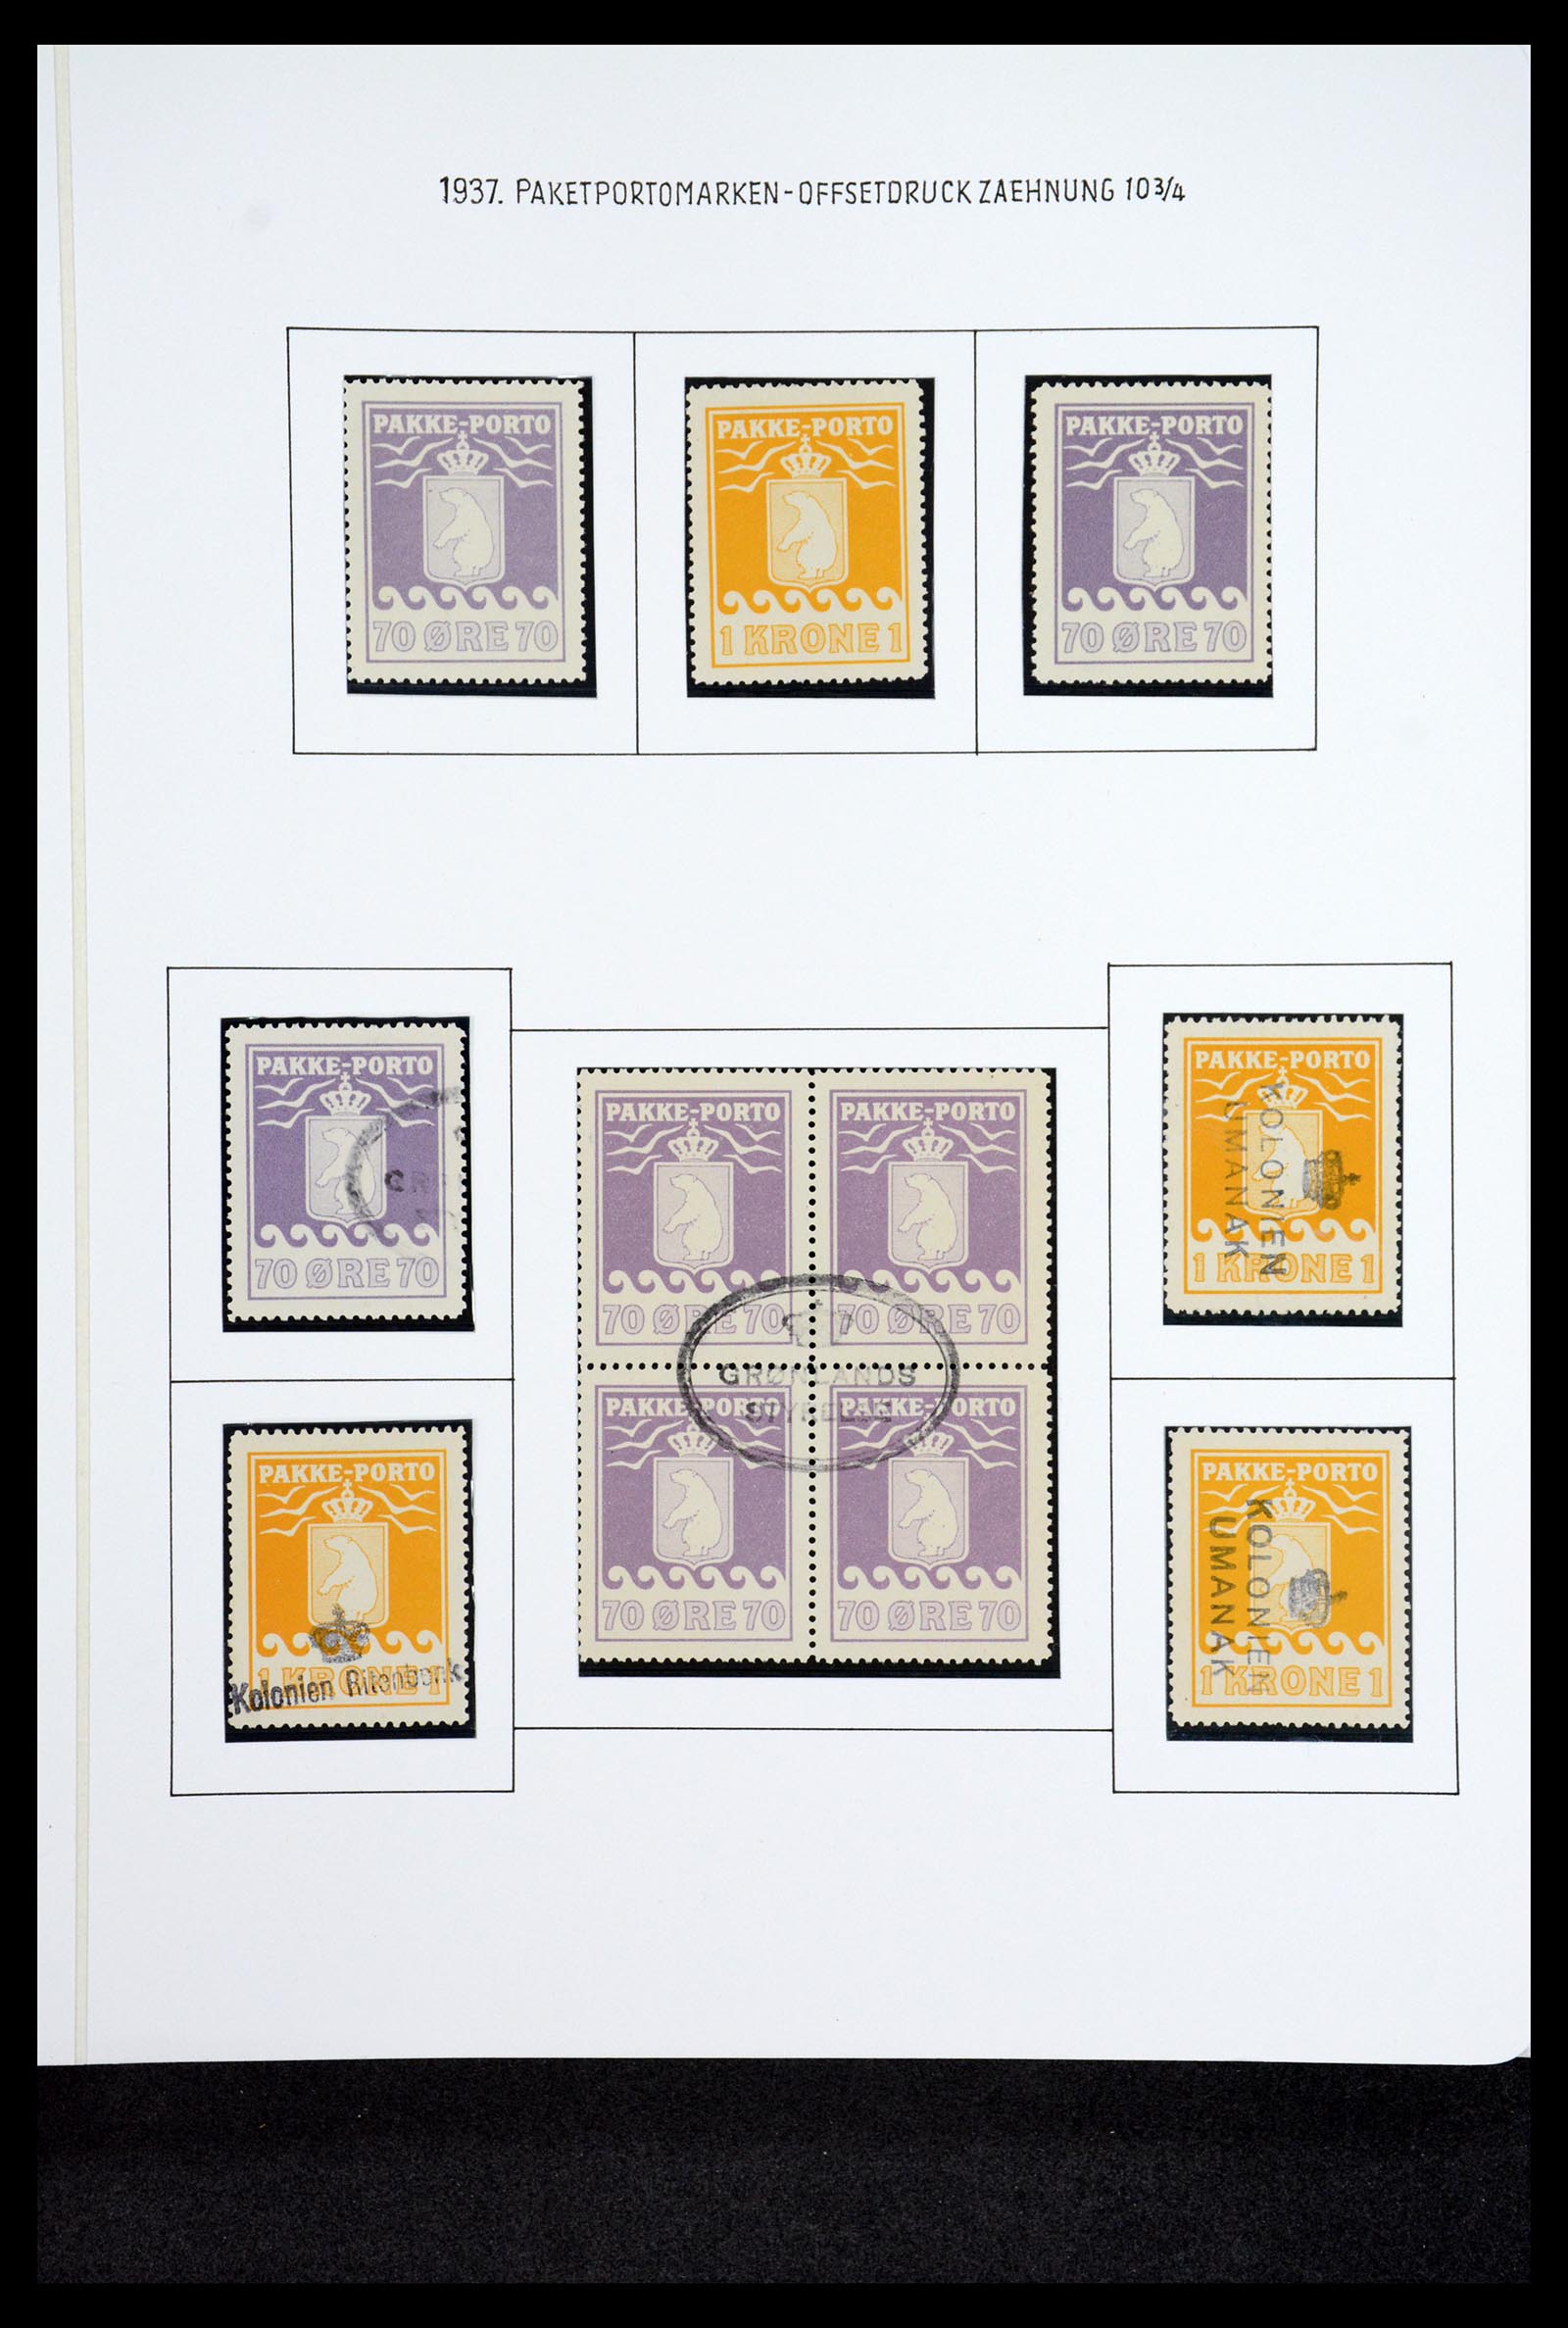 36748 007 - Stamp collection 36748 Greenland pakke-porto 1905-1930.